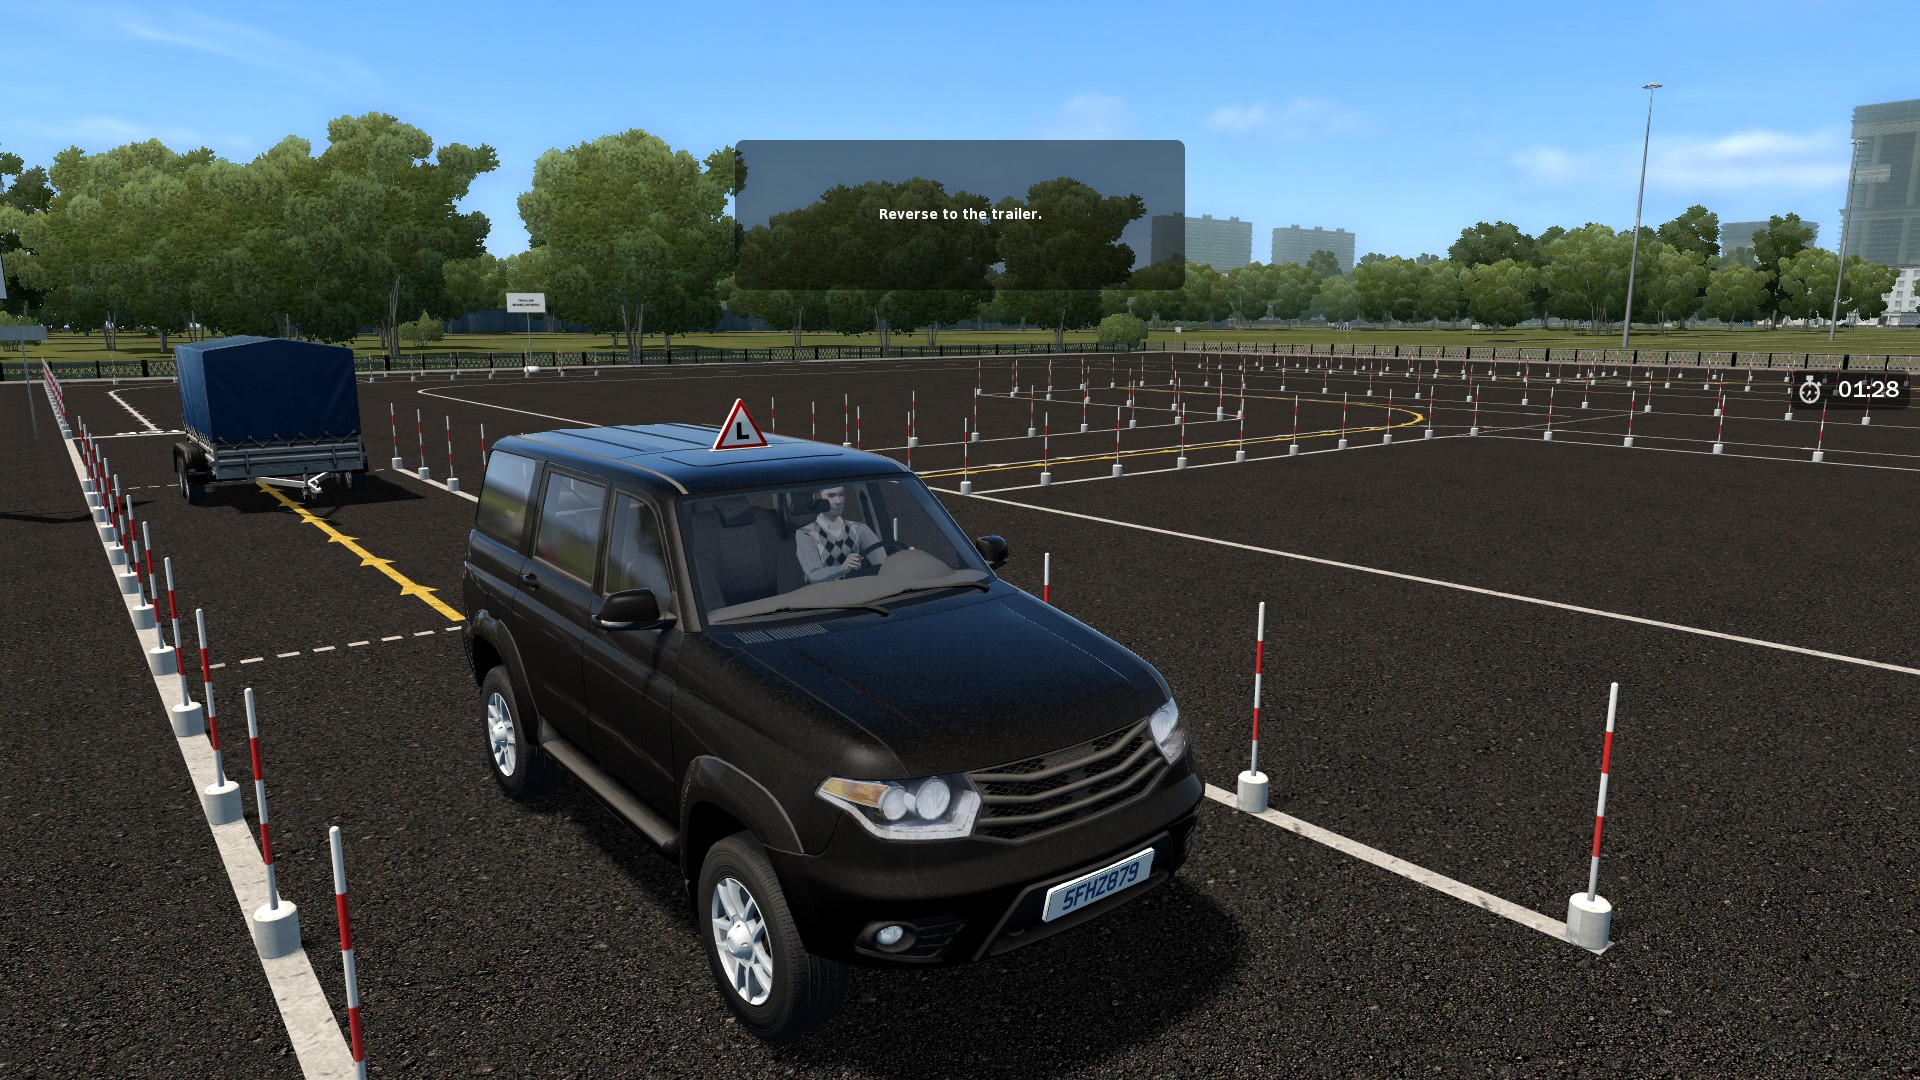 Veículo simulador de corrida, dirigindo jogos de carros 3d